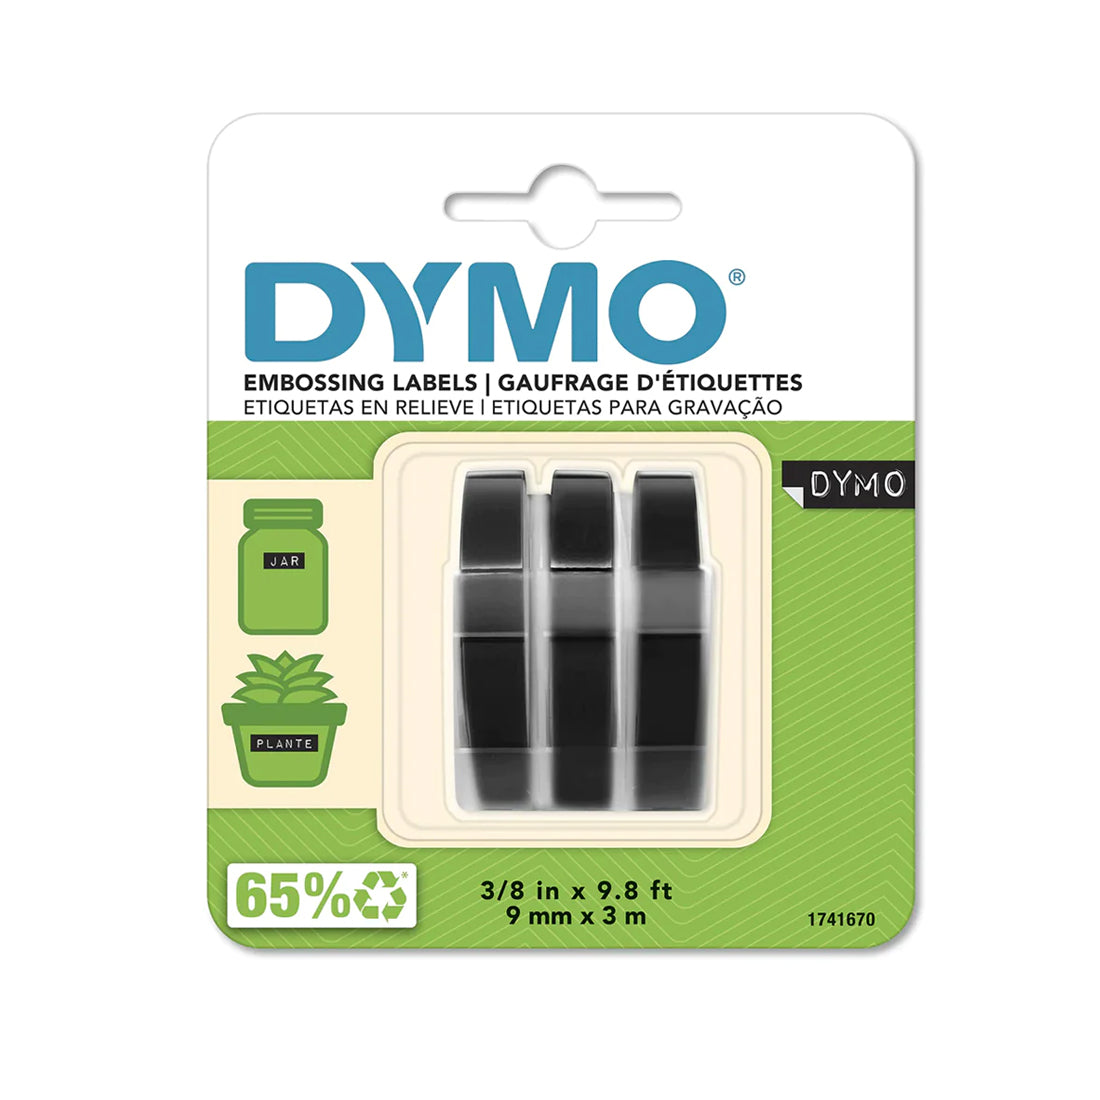 DYMO Embossing 3D Self-Adhesive Vinyl Labels Tape | Pack of 3